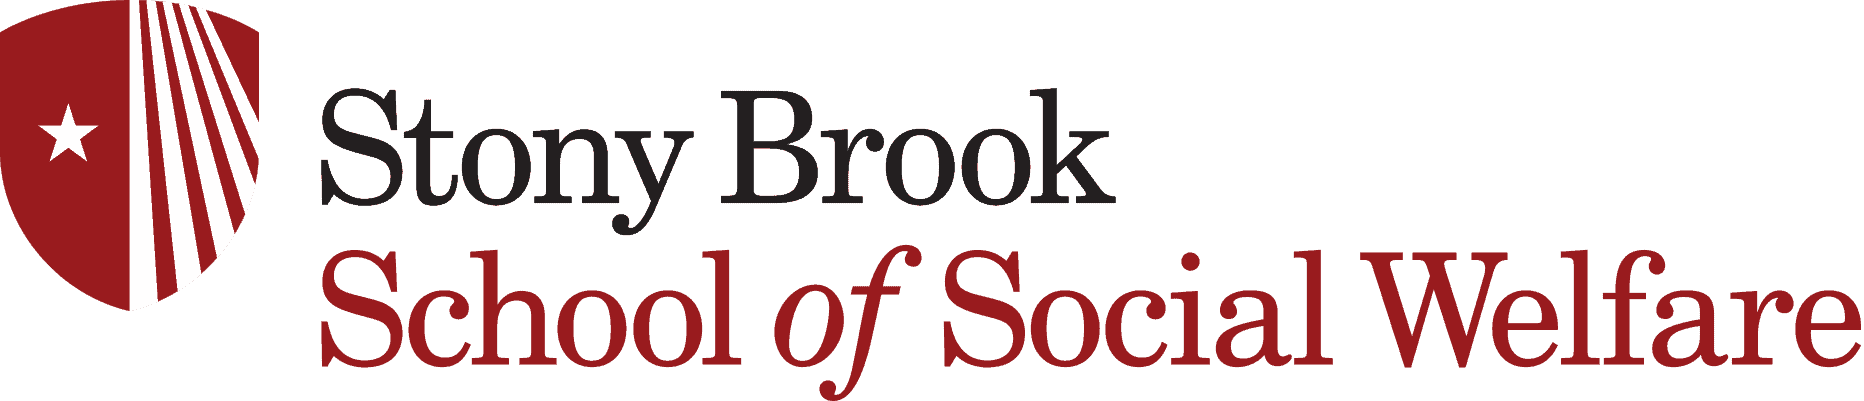 stony brook school of social welfare